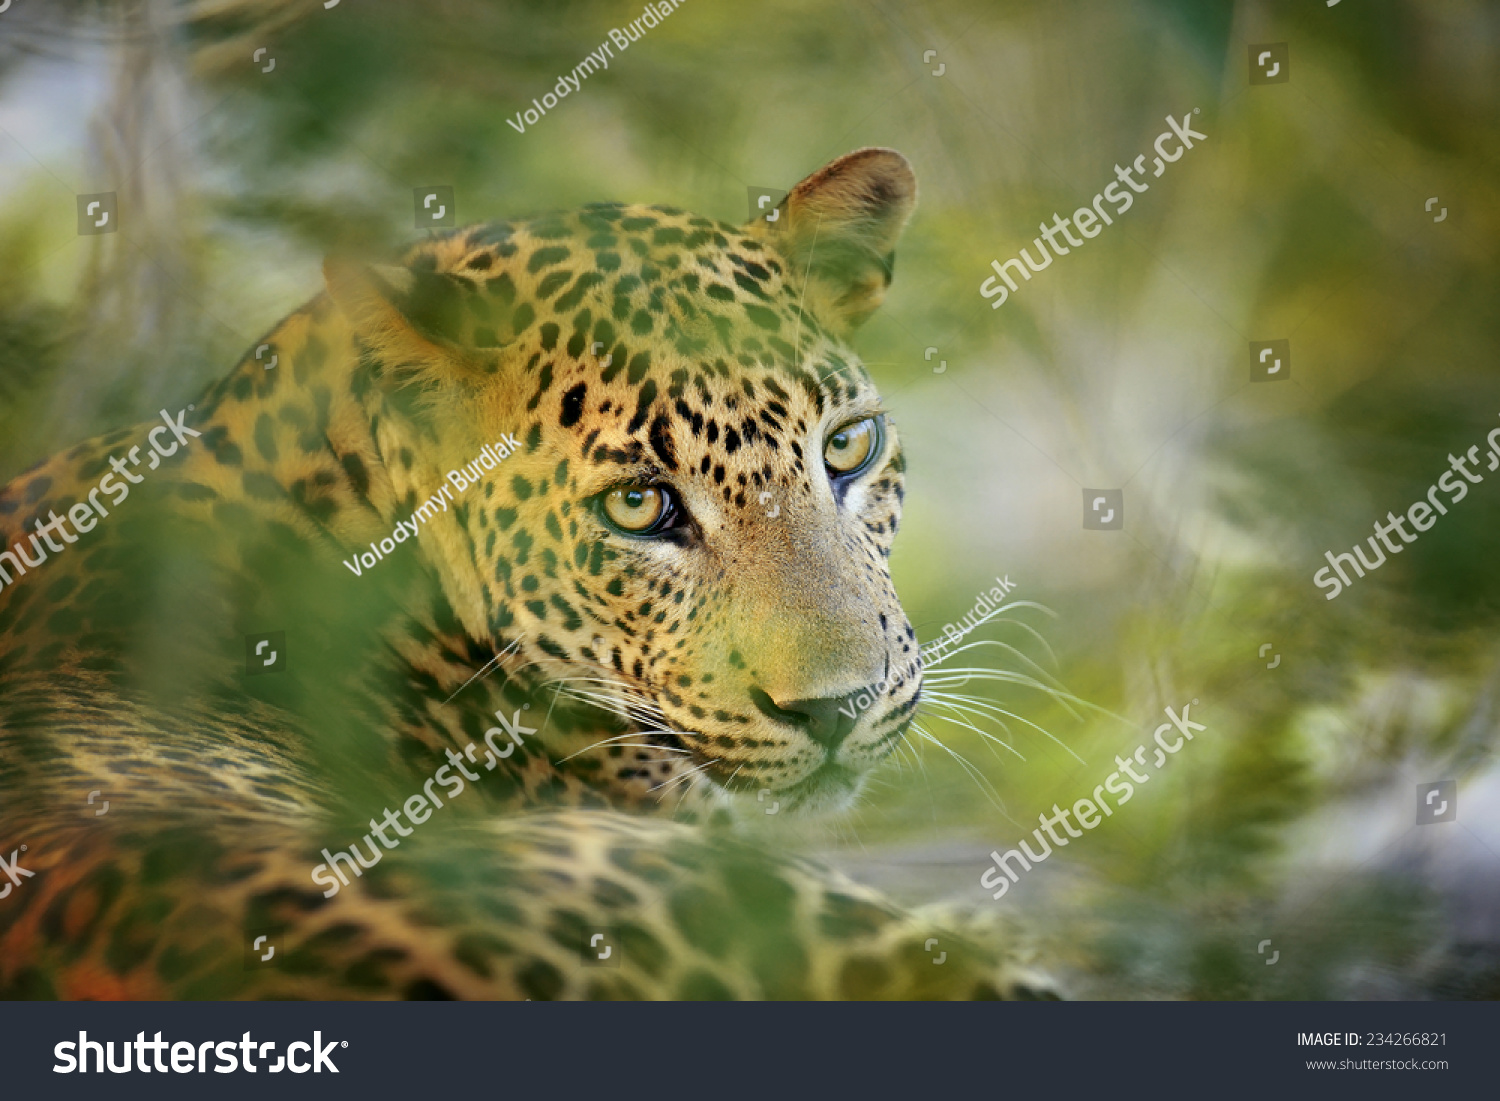 Leopard in the wild on the island of Sri Lanka #234266821